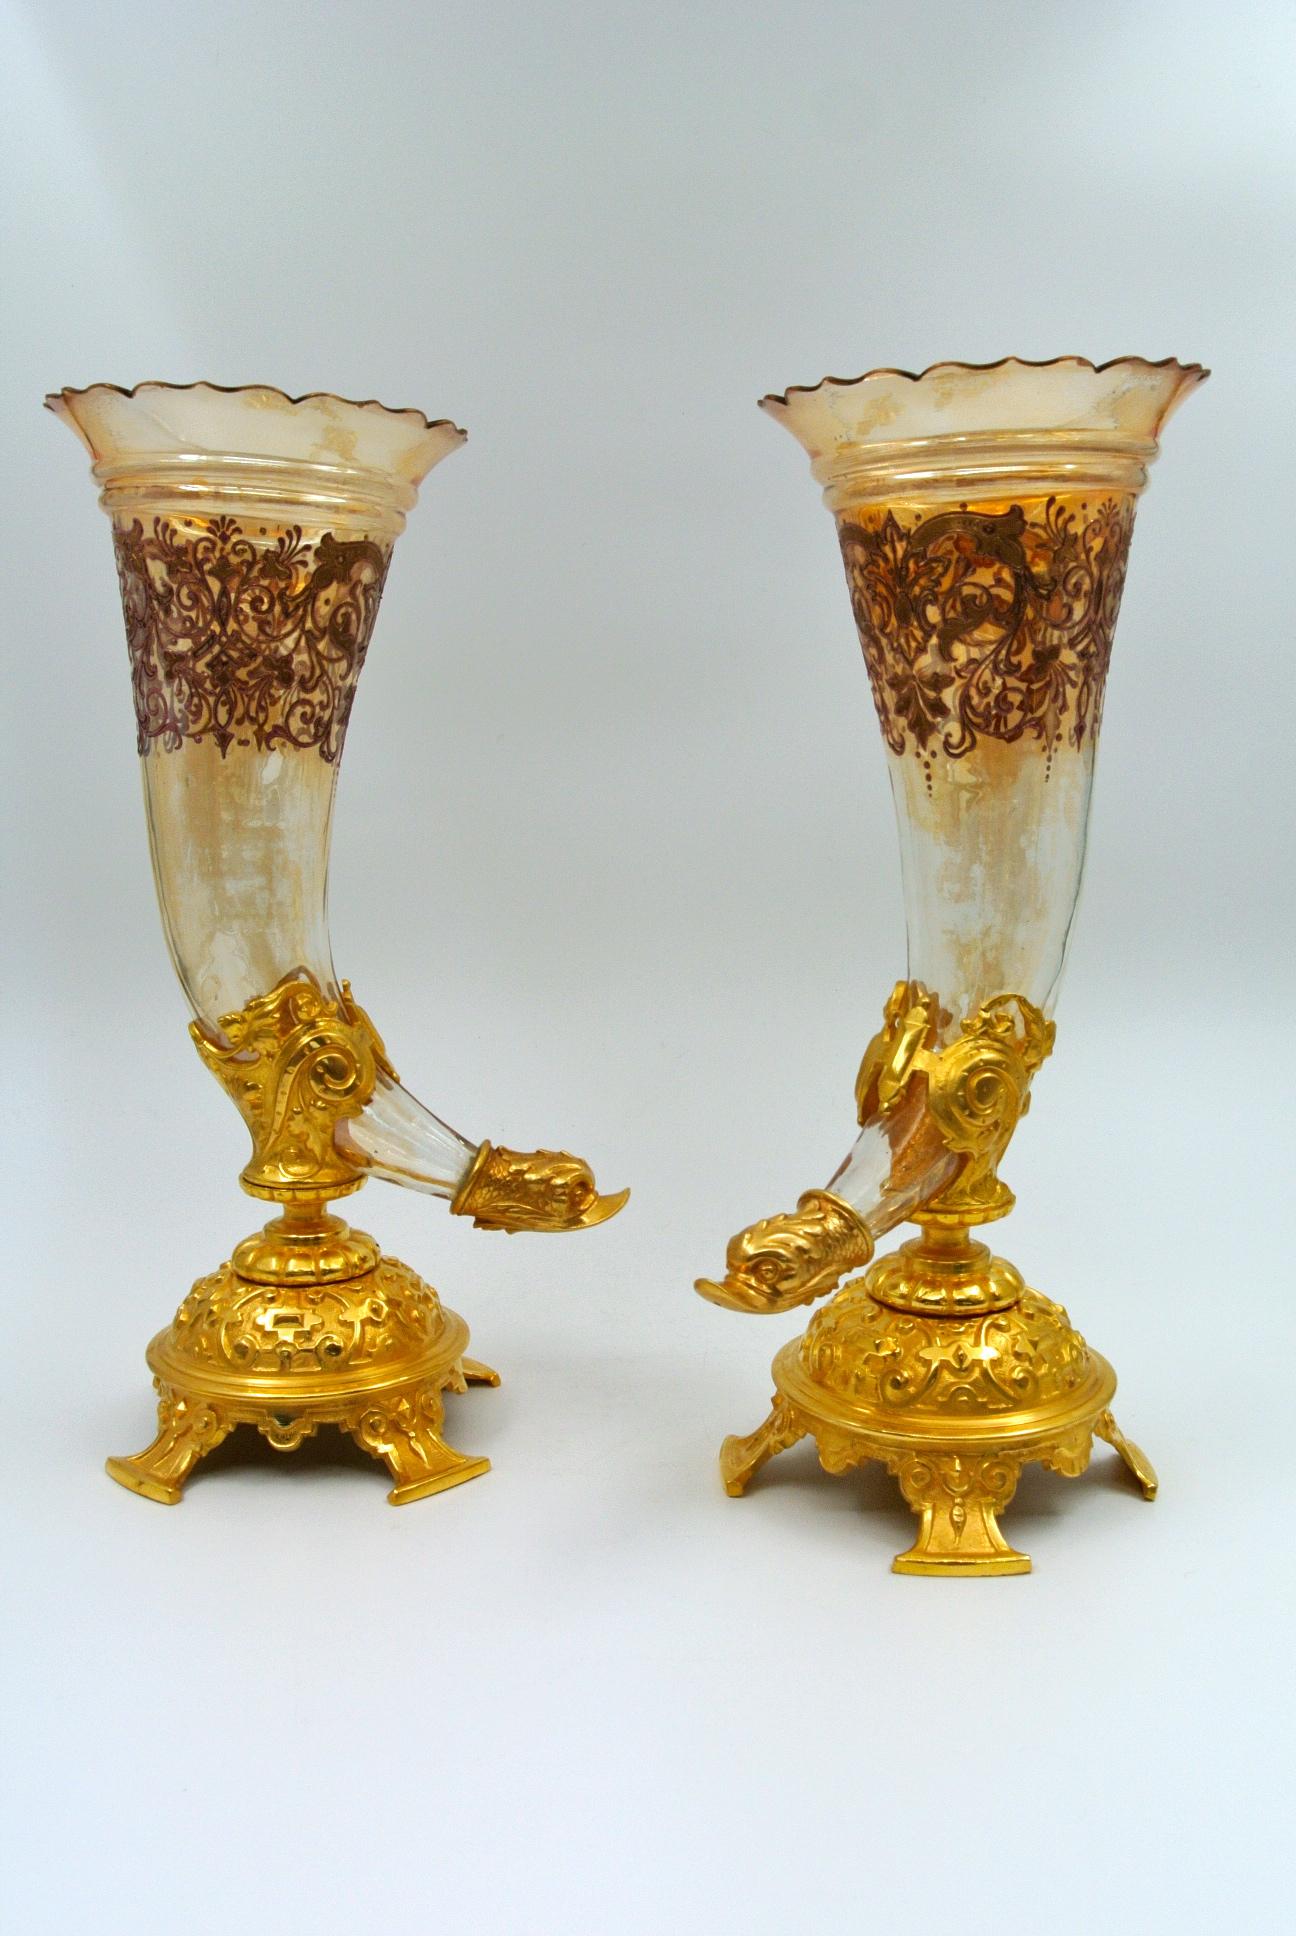 Pair of Bouquetières, enameled gilt bronze and crystal vases, Napoleon III period, 19th century.
Measures: H 34 cm, W 20 cm, D 14 cm.